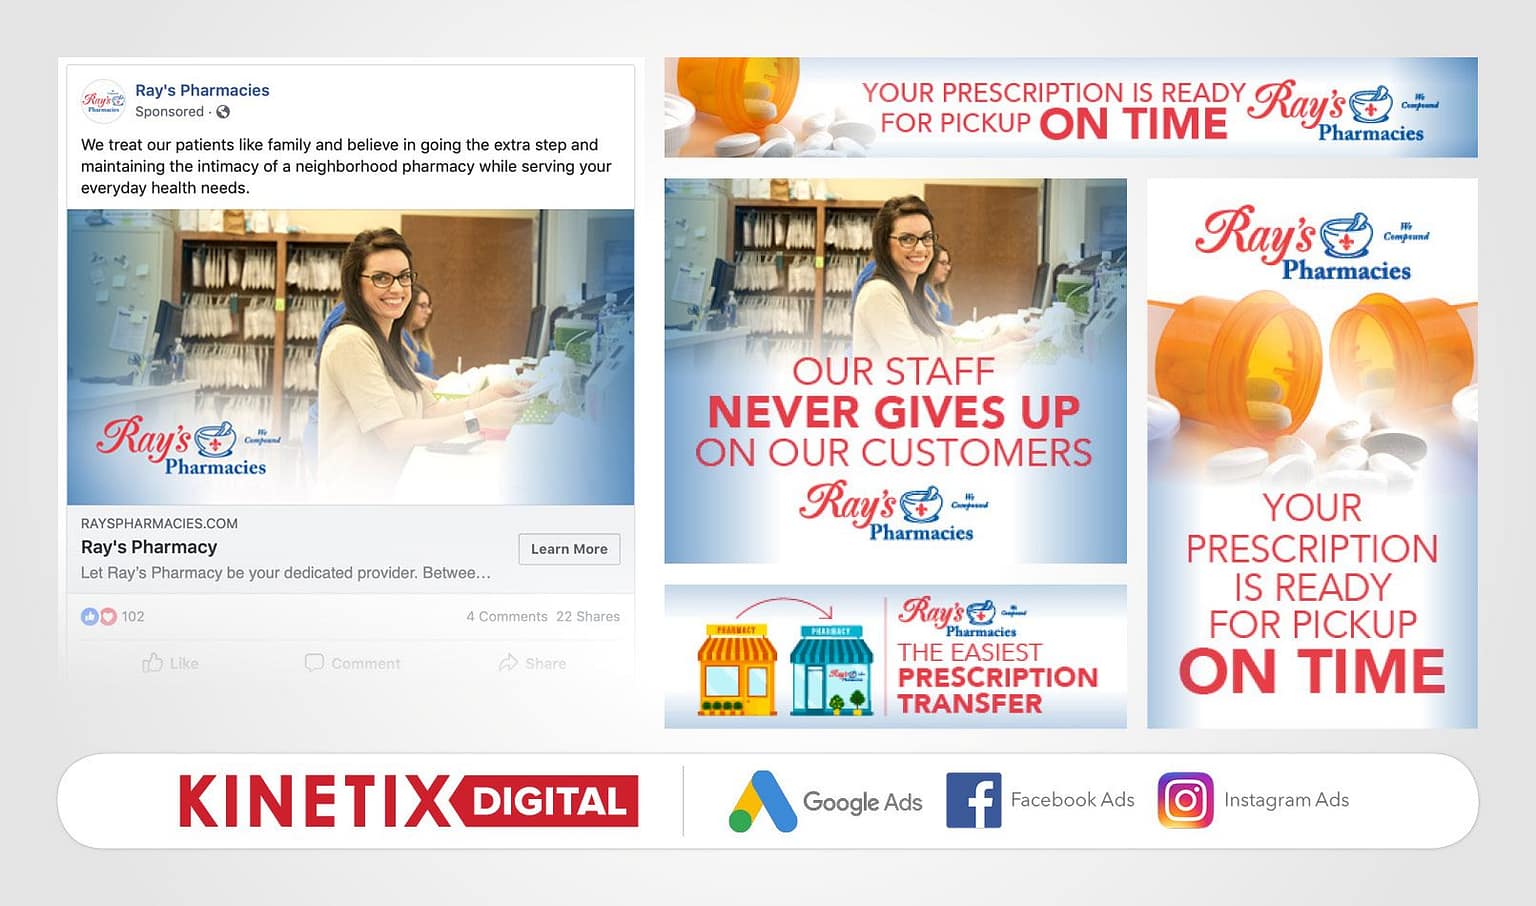 Kinetix Digital Marketing - Ray's Pharmacy